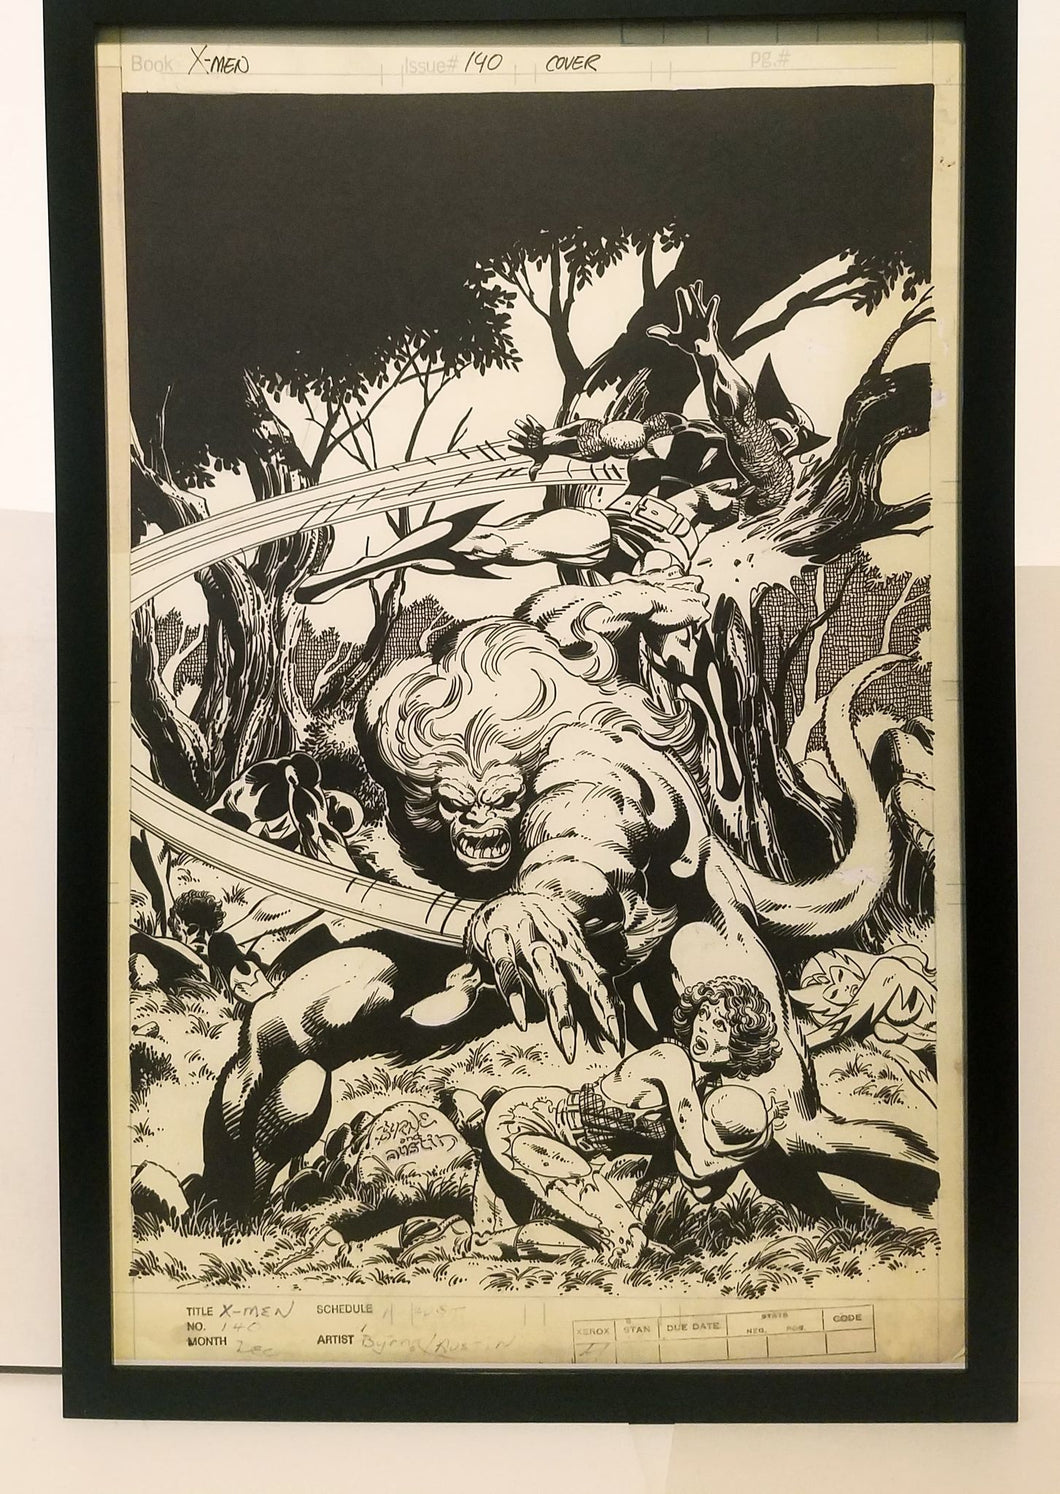 Uncanny X-Men #140 by John Byrne 11x17 FRAMED Original Art Poster Marvel Comics